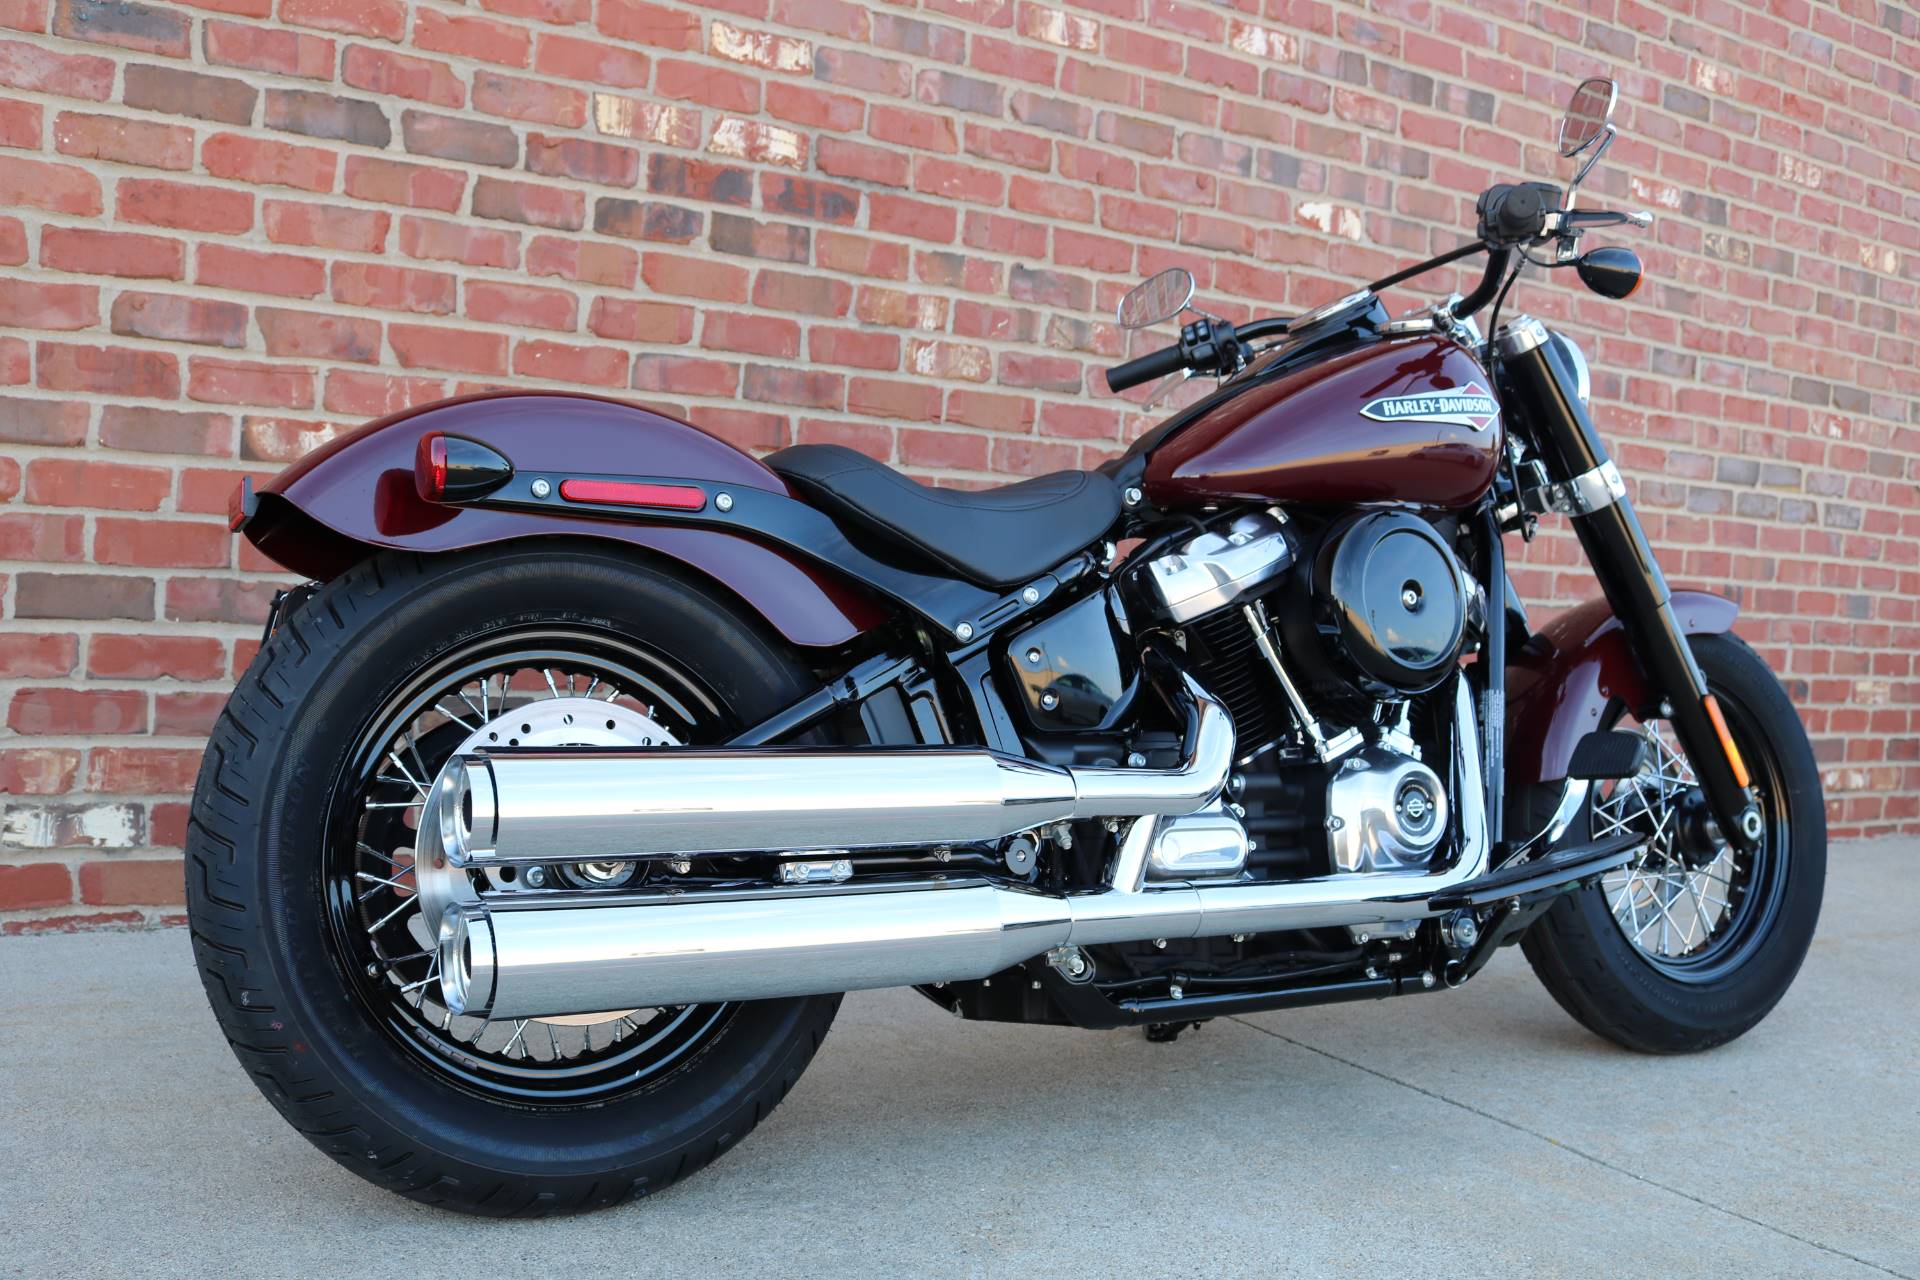 New 2020  Harley  Davidson  Softail  Slim   Motorcycles in 